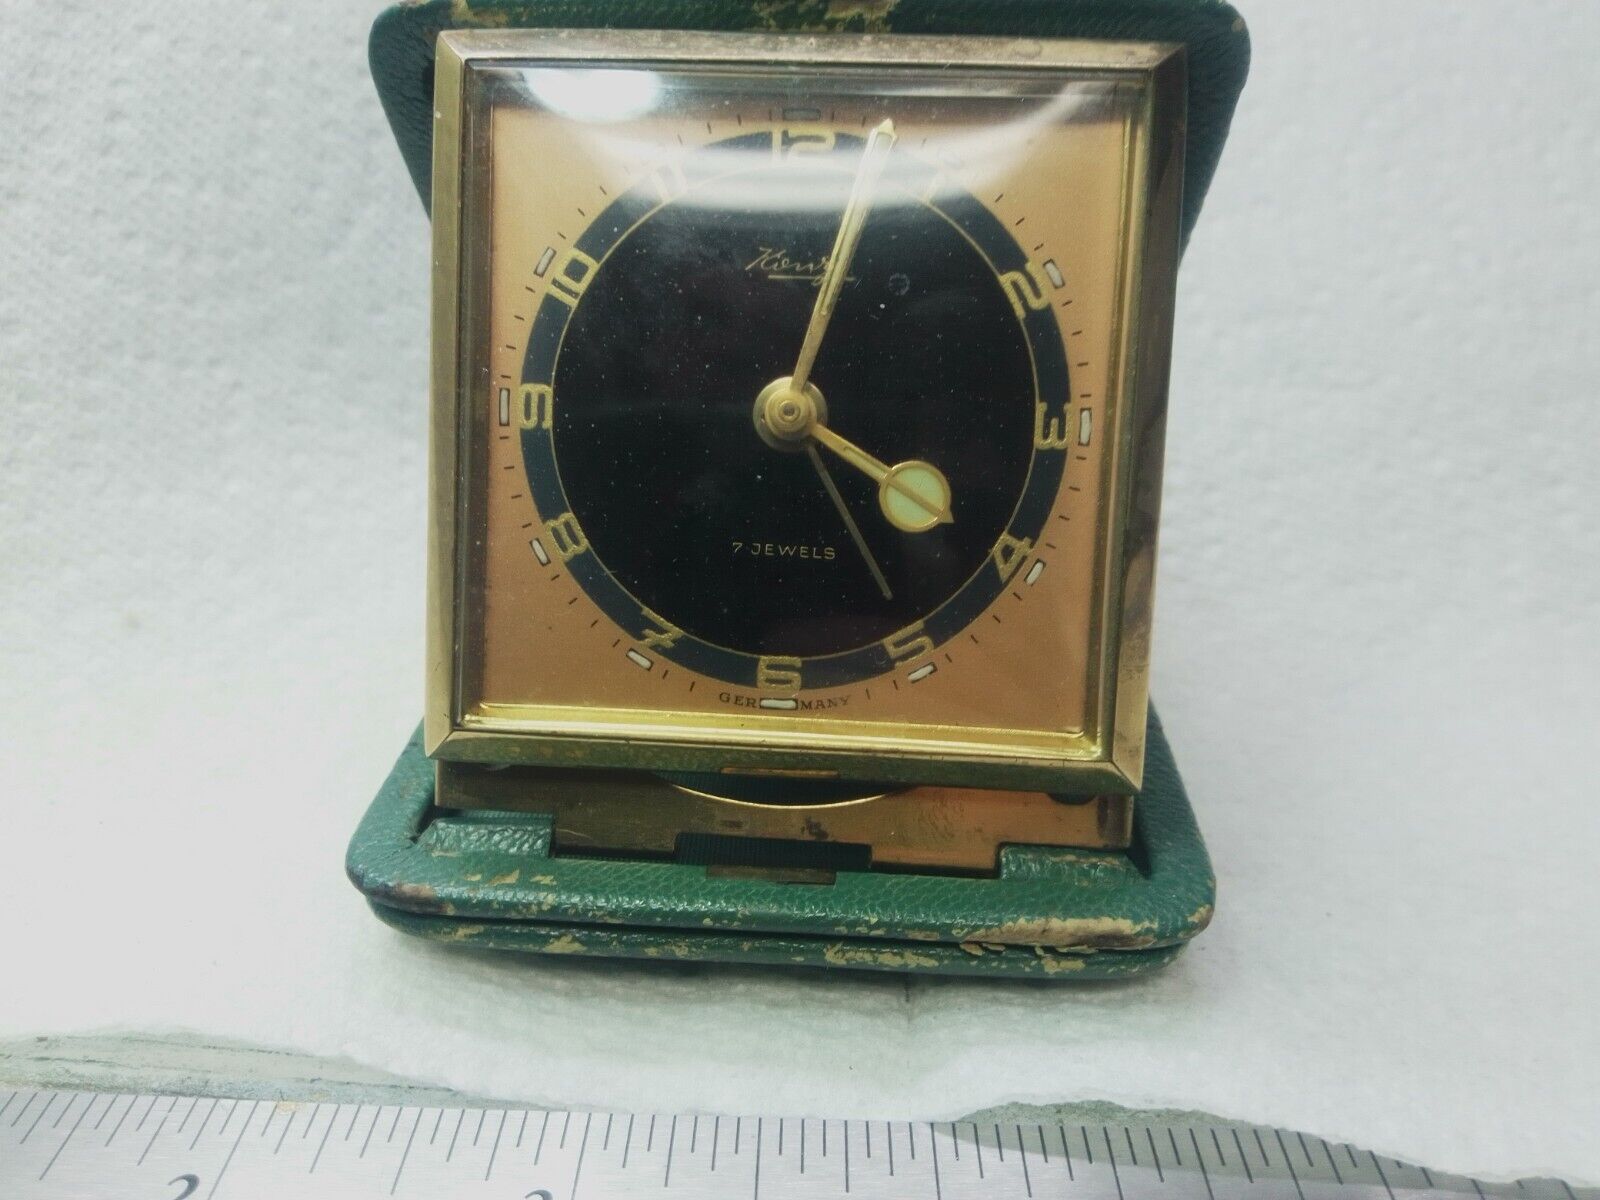 Vintage Rare Kienzle Alarm Travel Clock with green leather case (Runs)